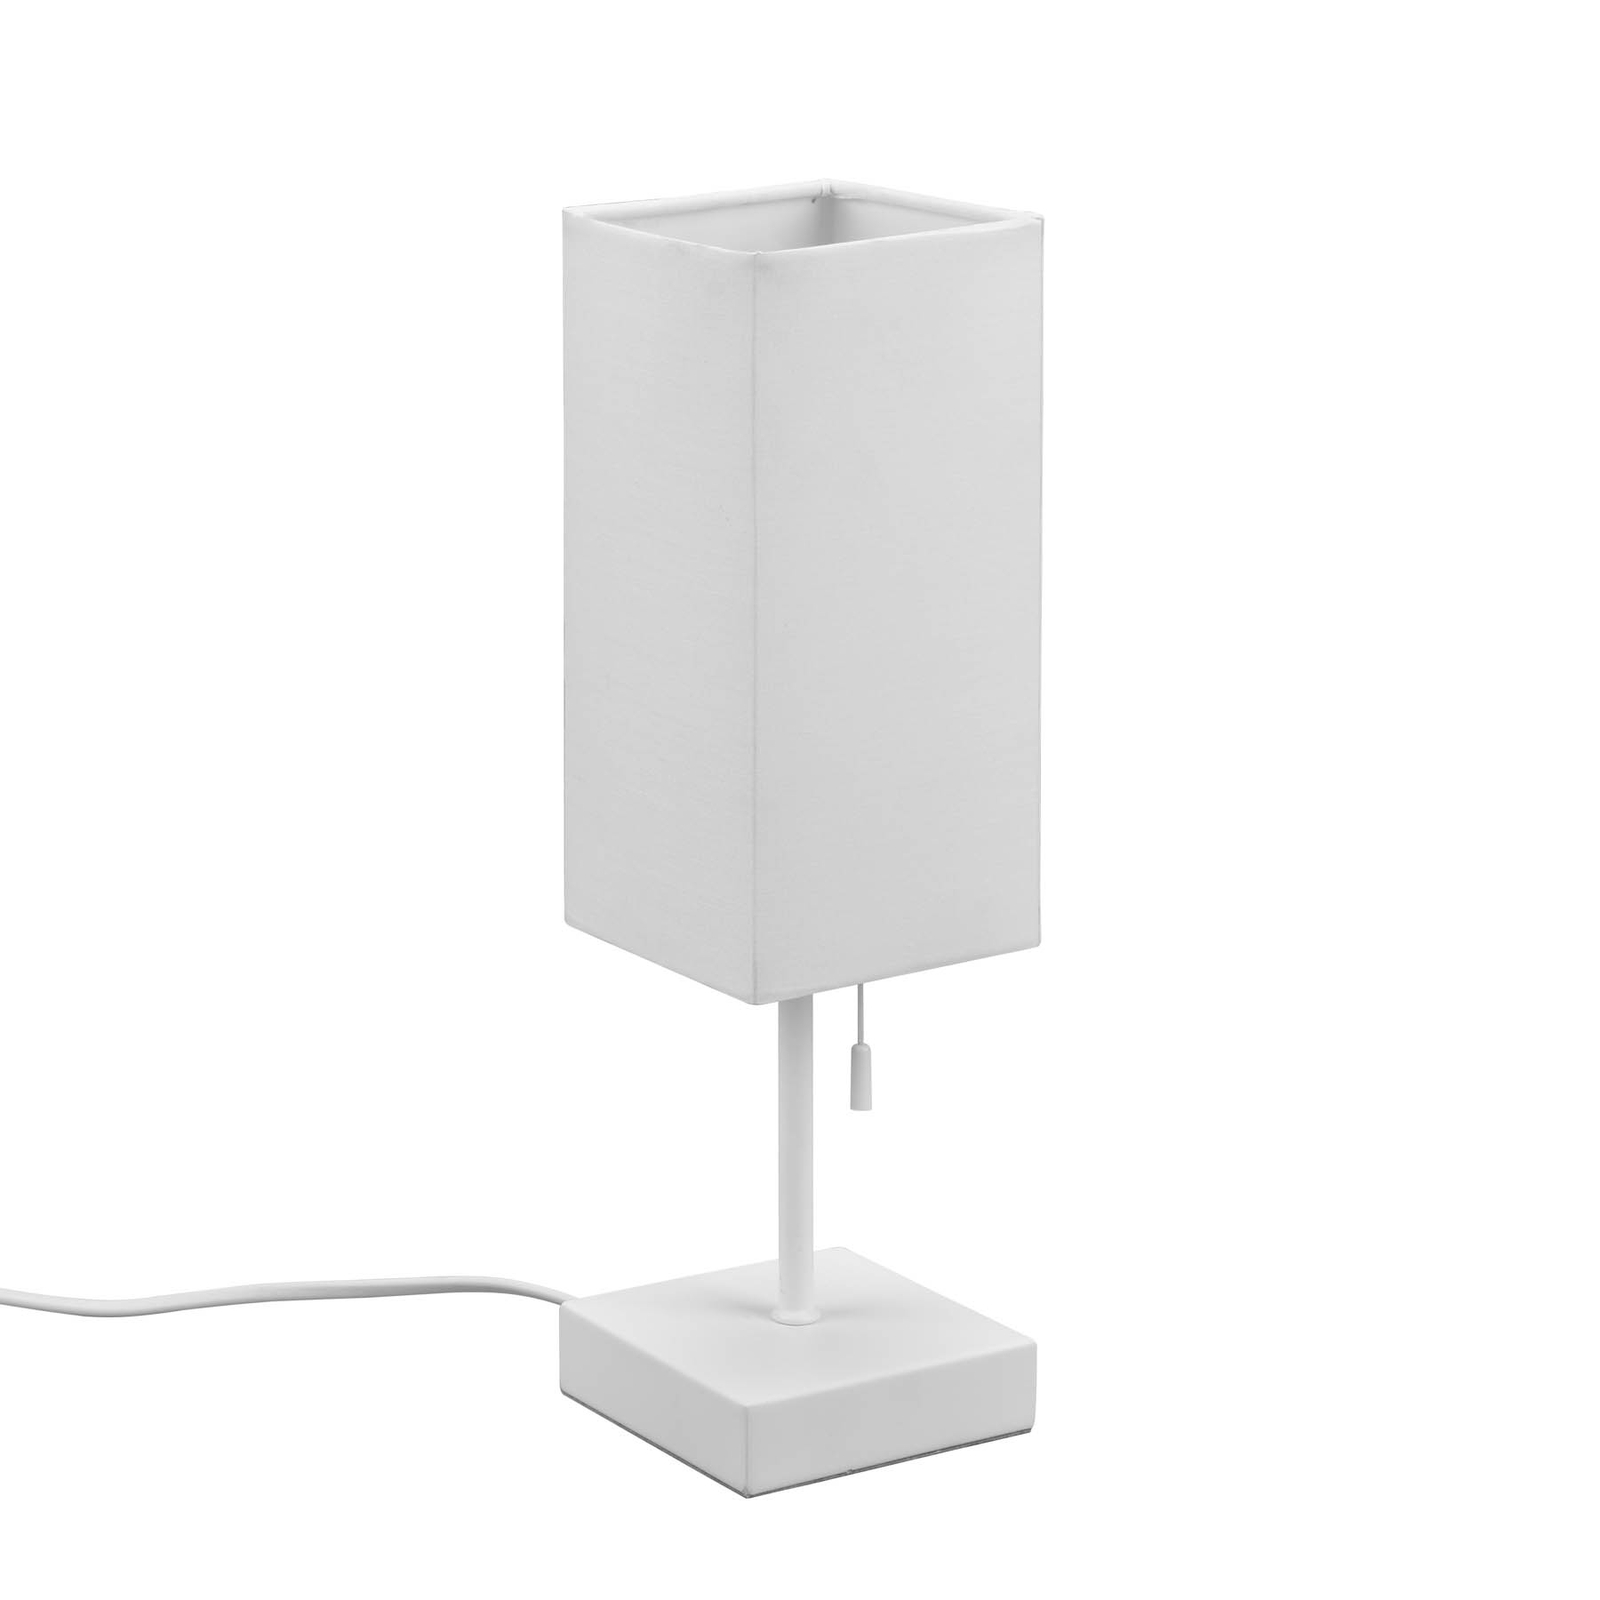 Tafellamp Ole met USB-aansluiting, wit/wit